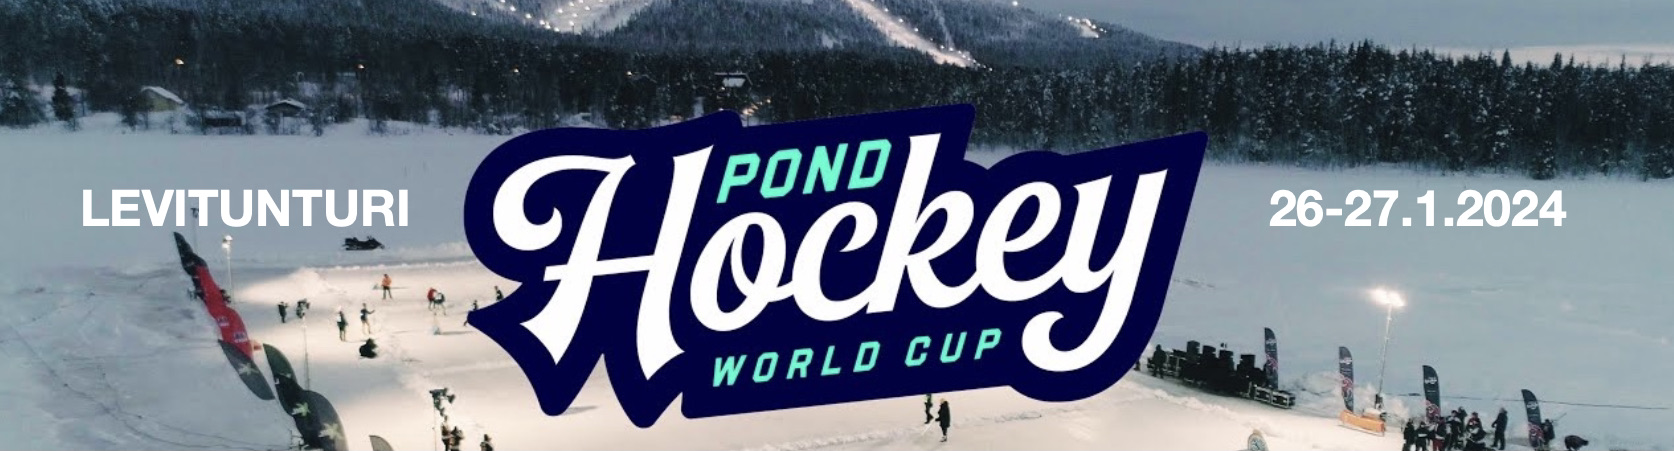 Pond Hockey World Cup